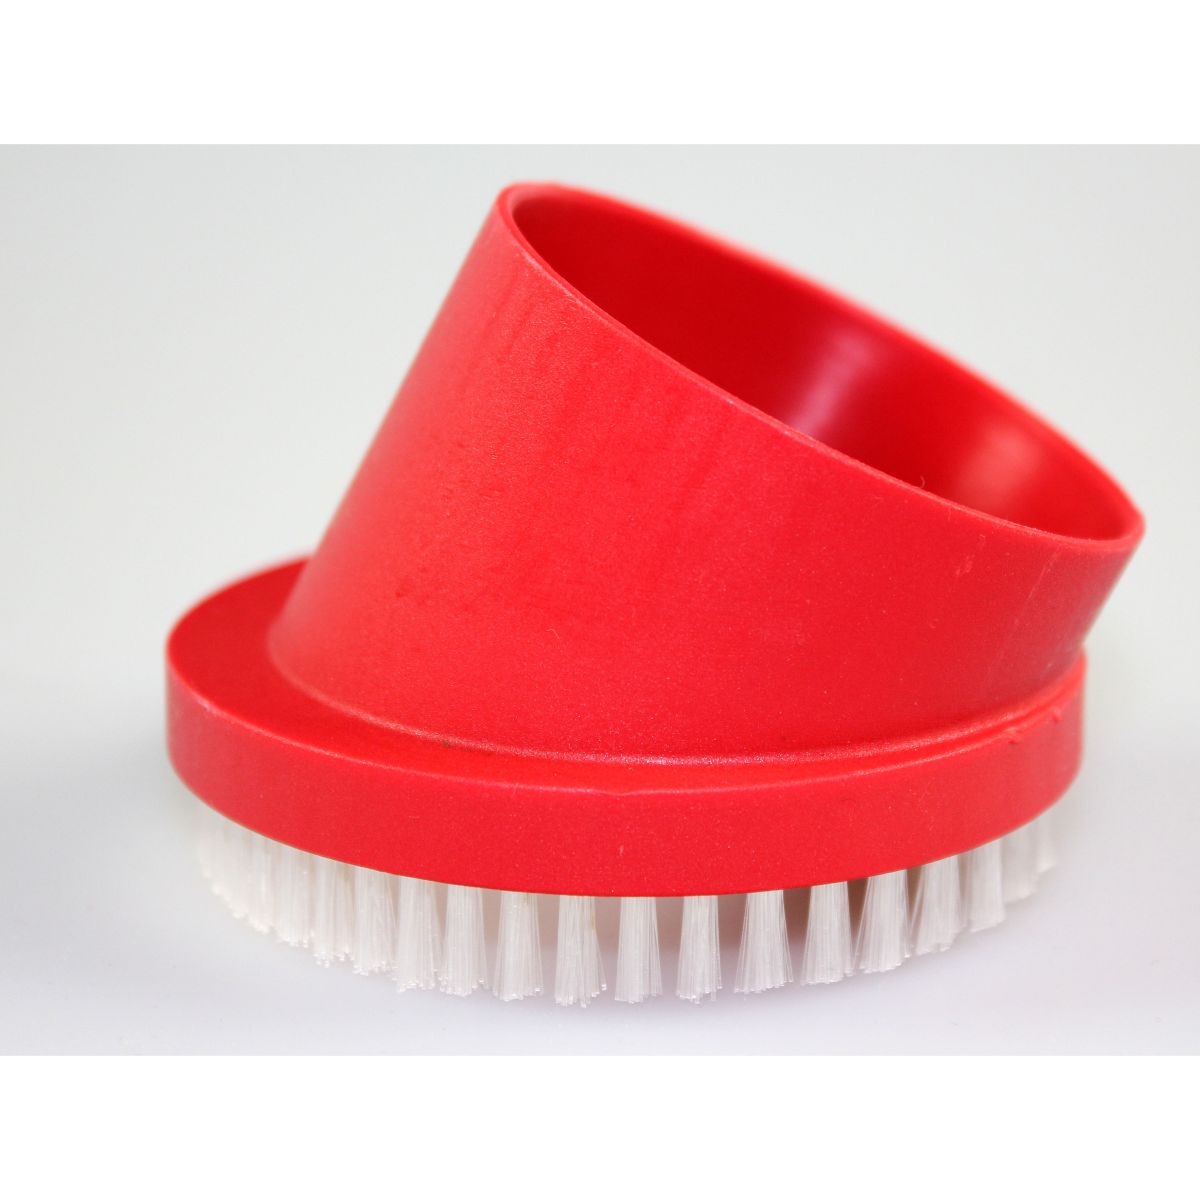 Brush head for Rotador-ADAPTOR (red)